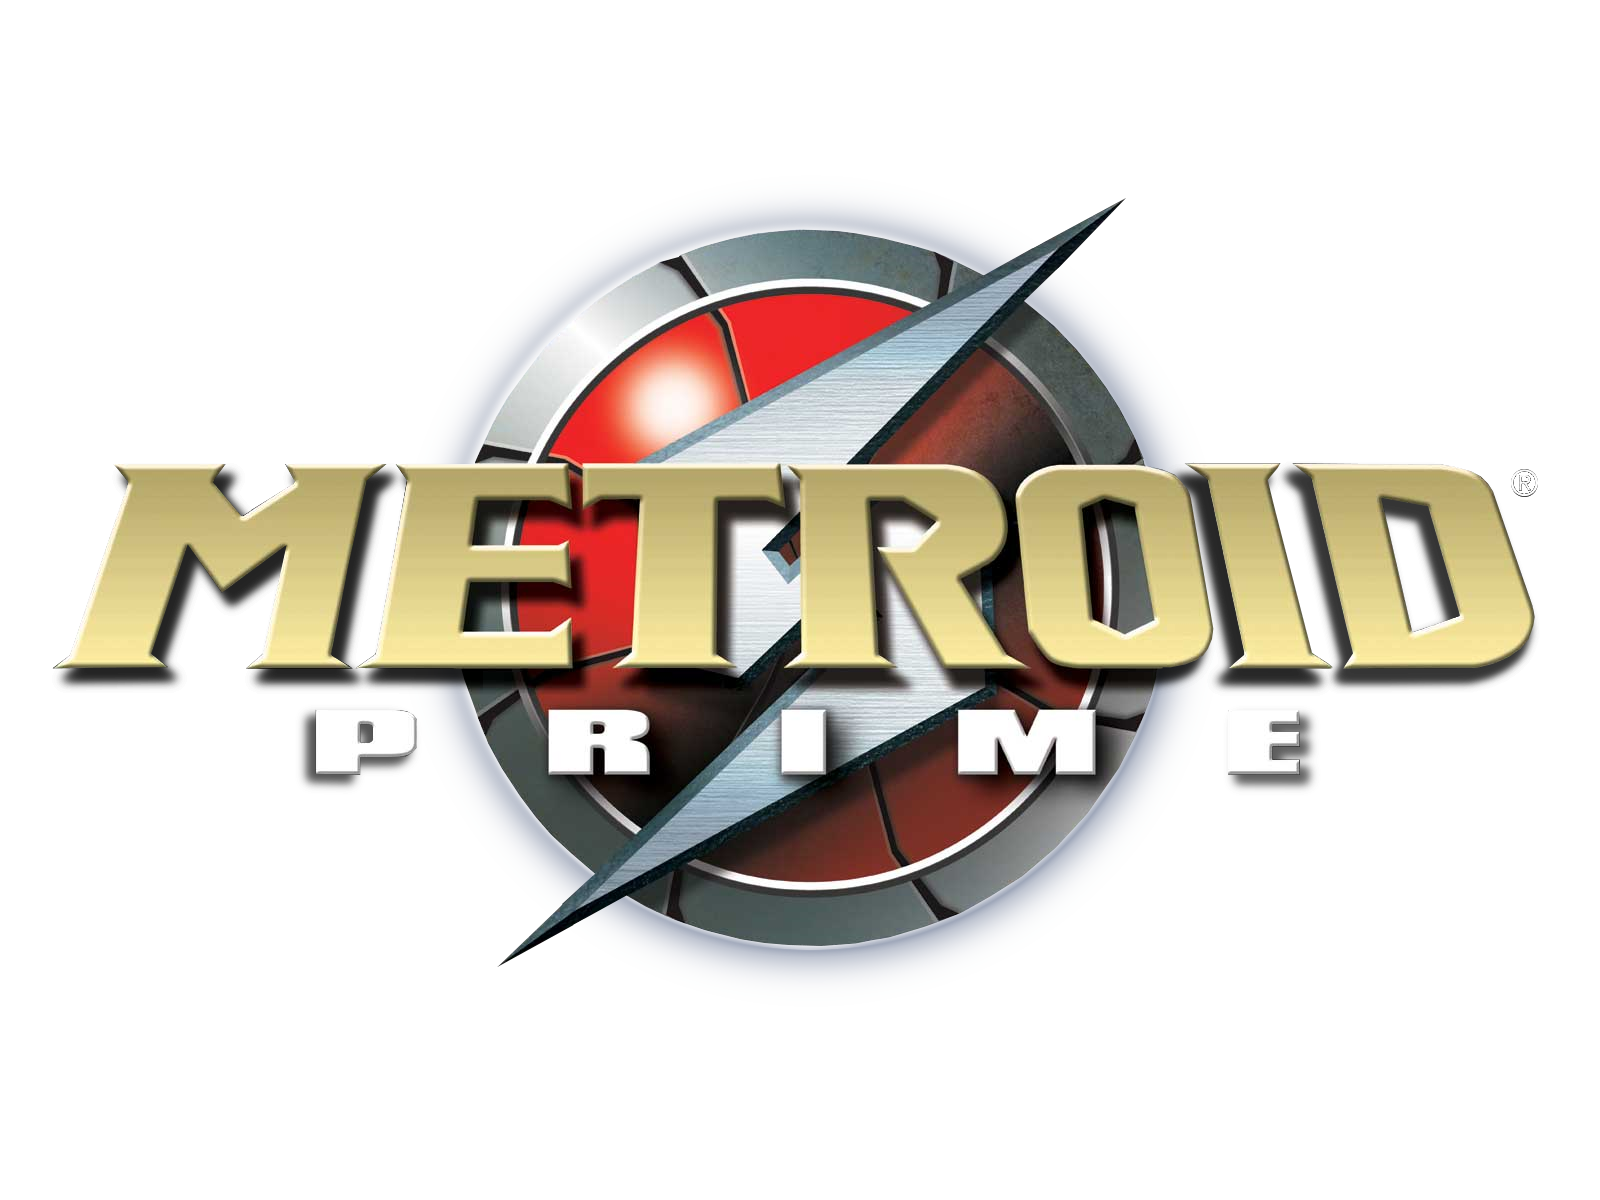 metroid prime remastered near me